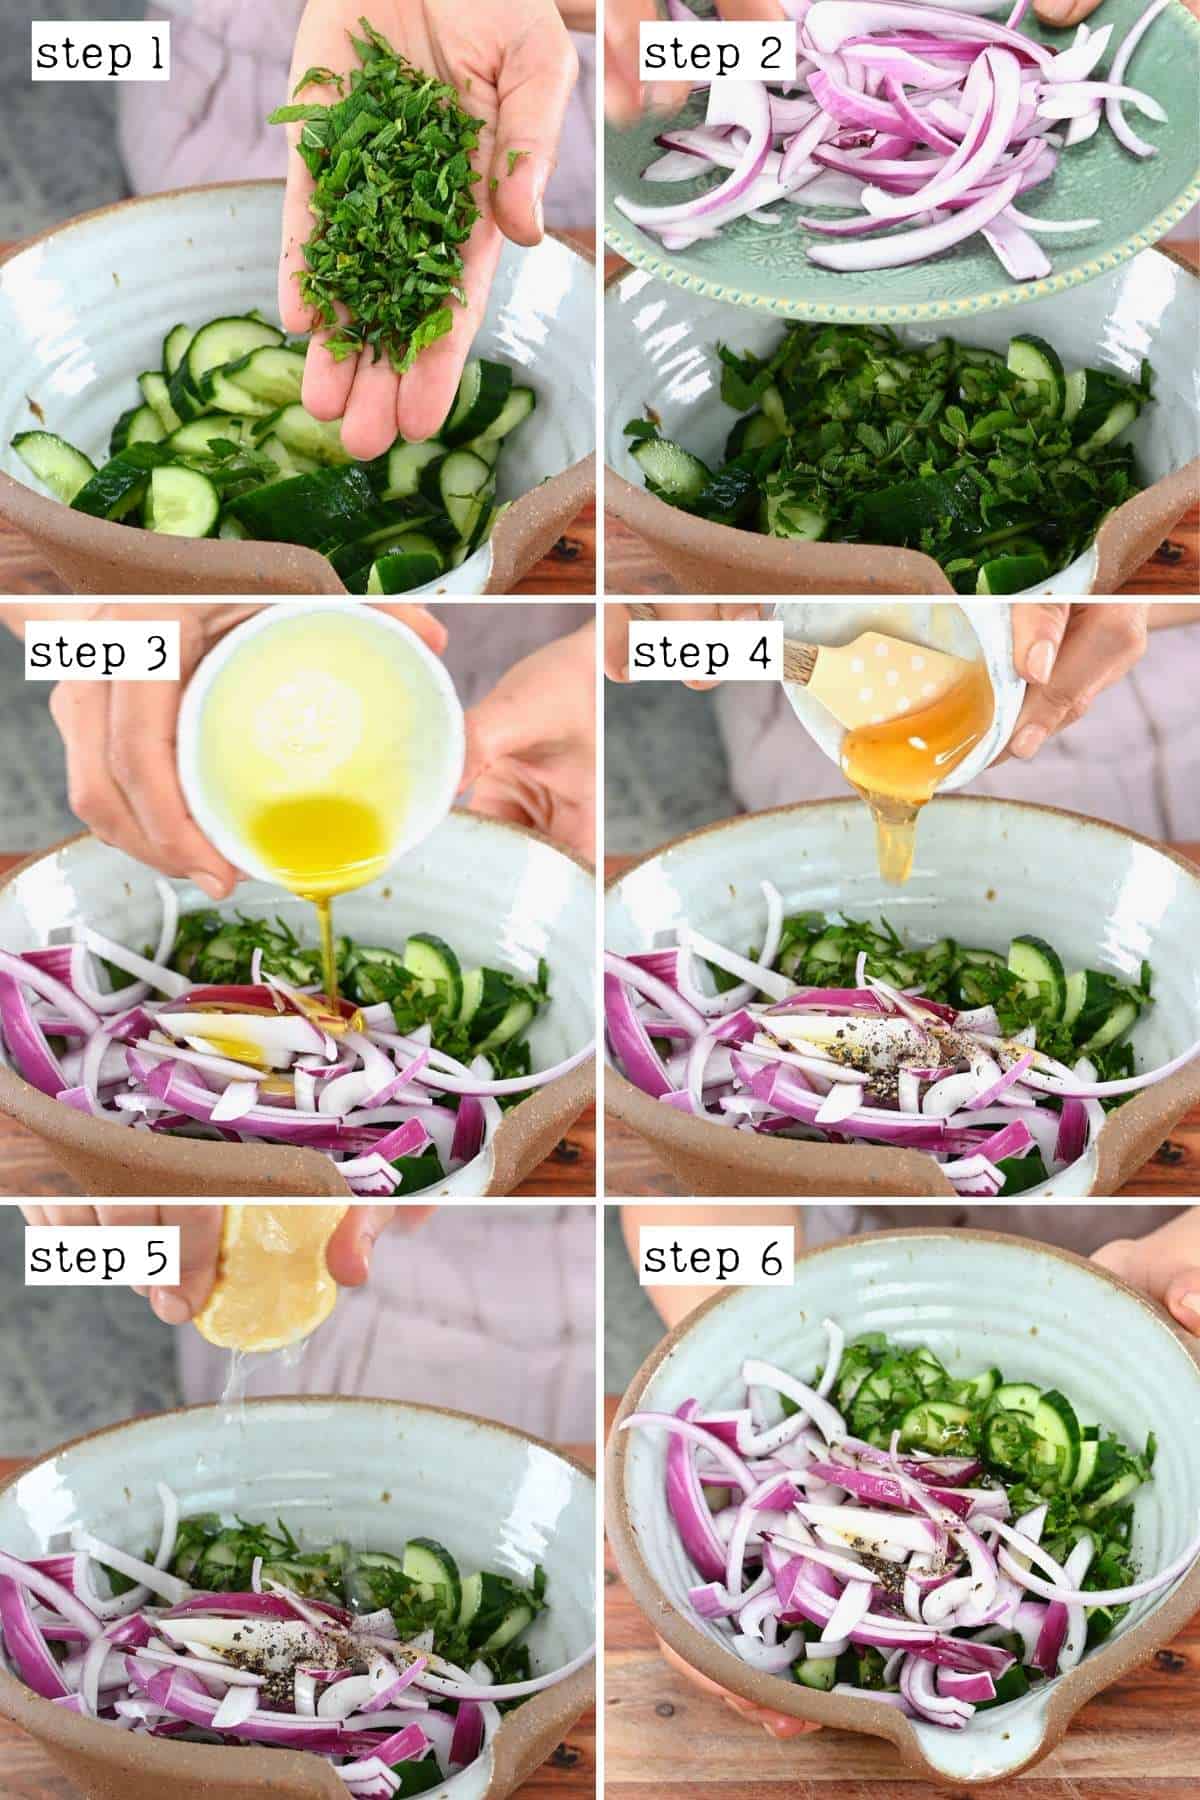 Steps for preparing cucumber onion salad